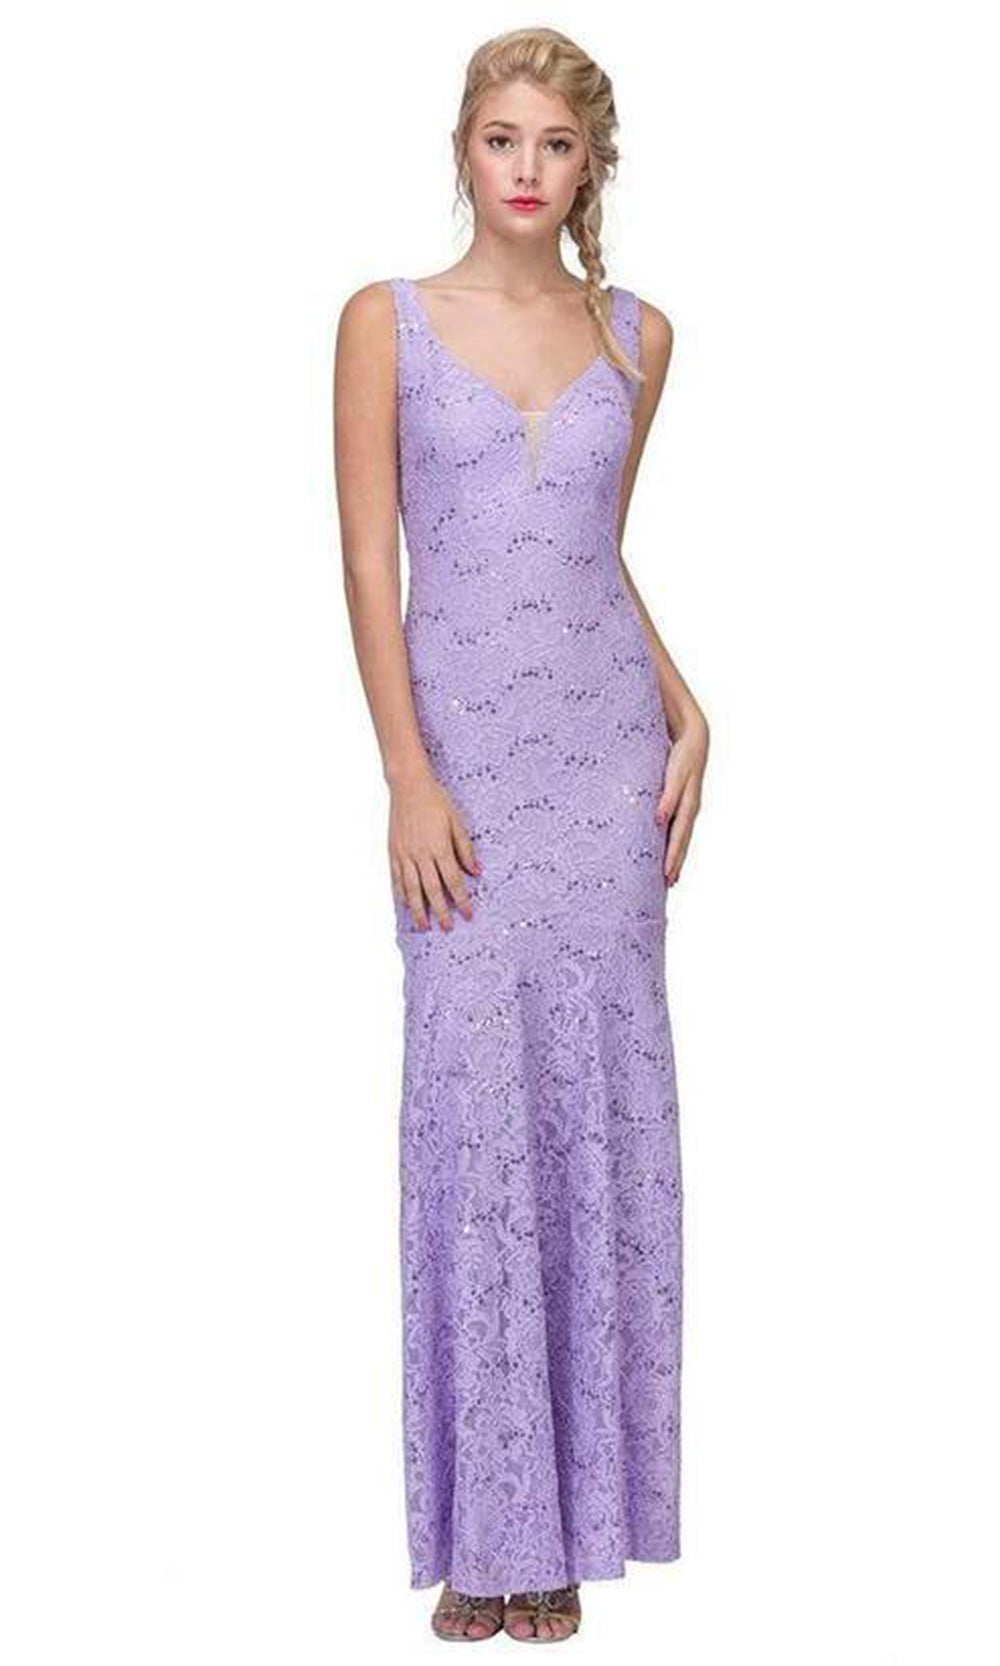 Eureka Fashion - 5010SC Scoop Neck Lace Trumpet Dress In Purple